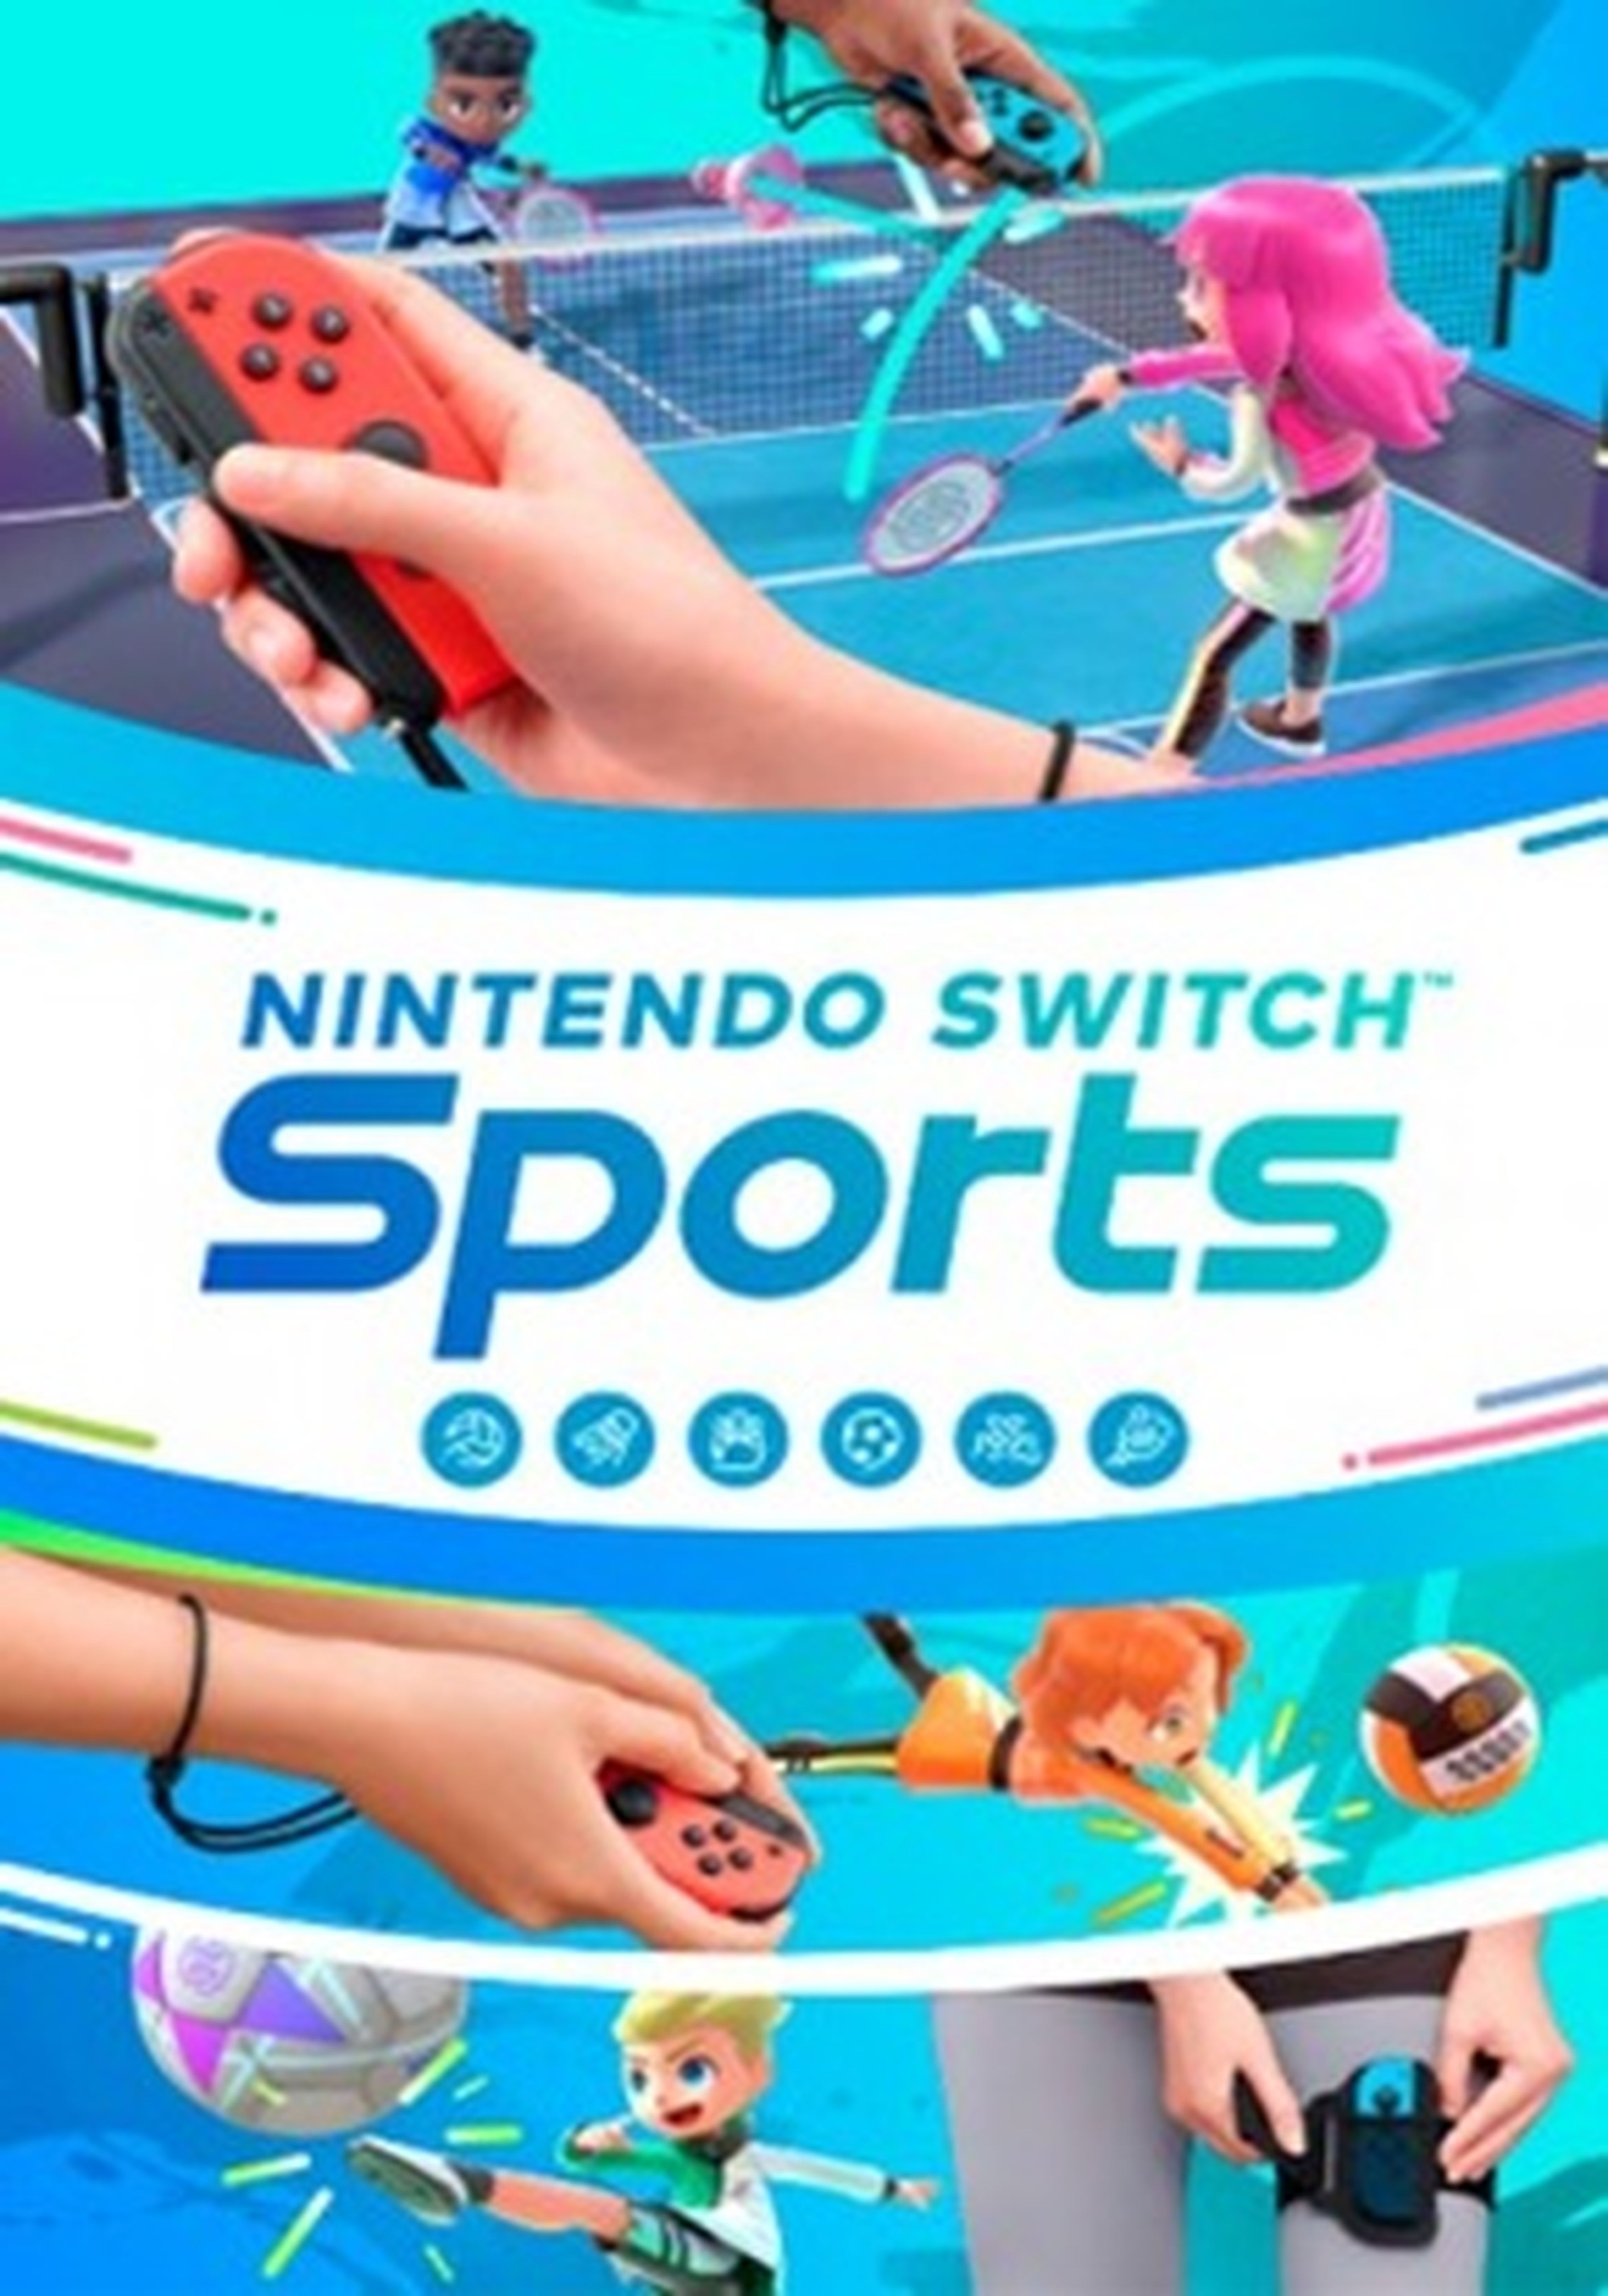 Nintendo Switch Sports cartel